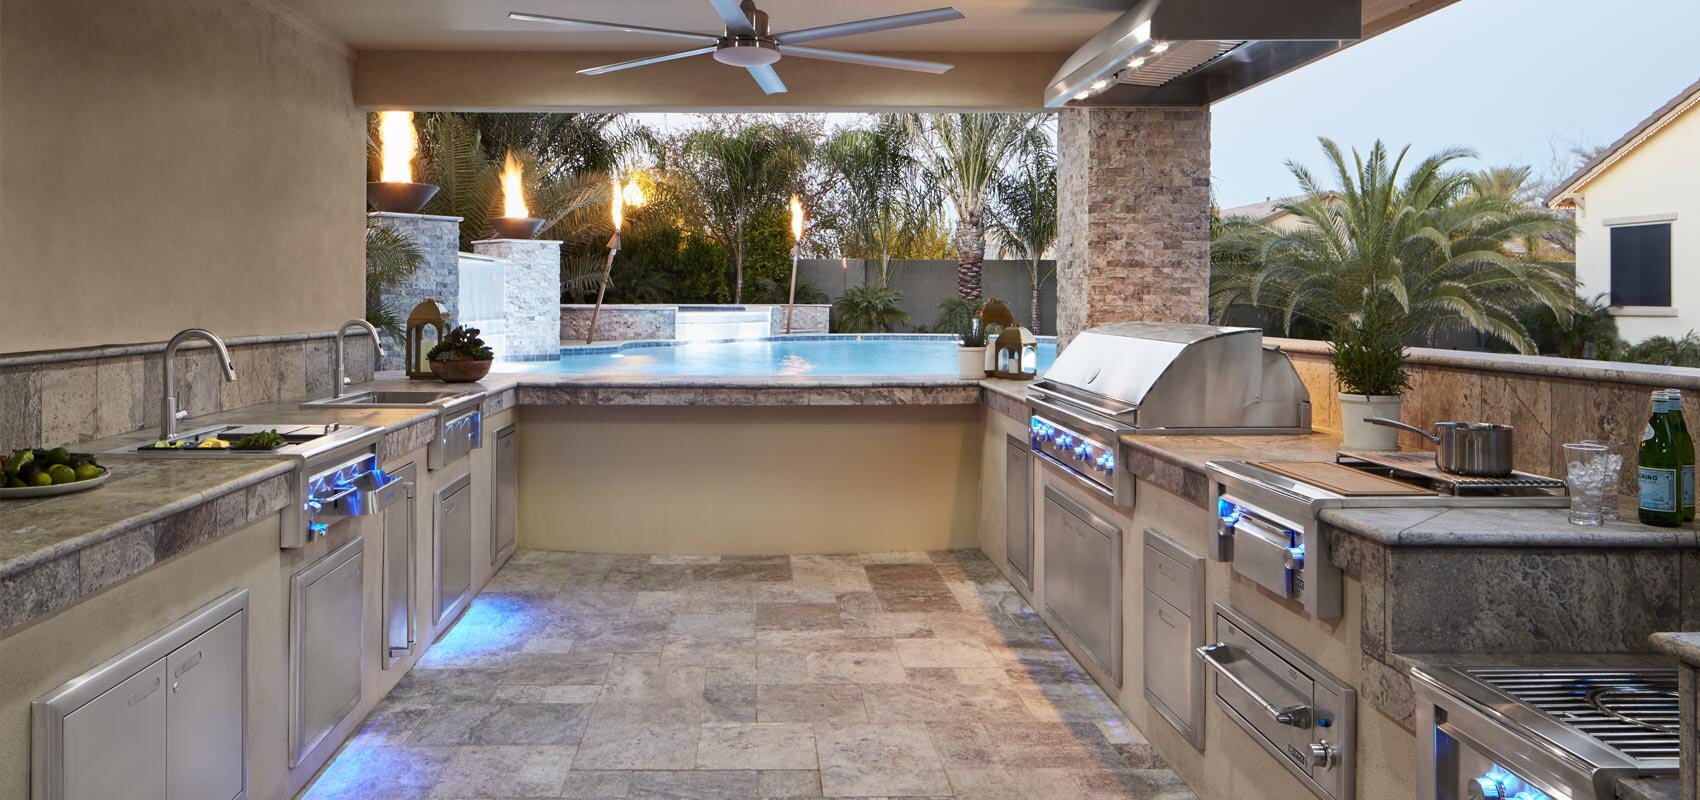 South Florida Outdoor Kitchen Design